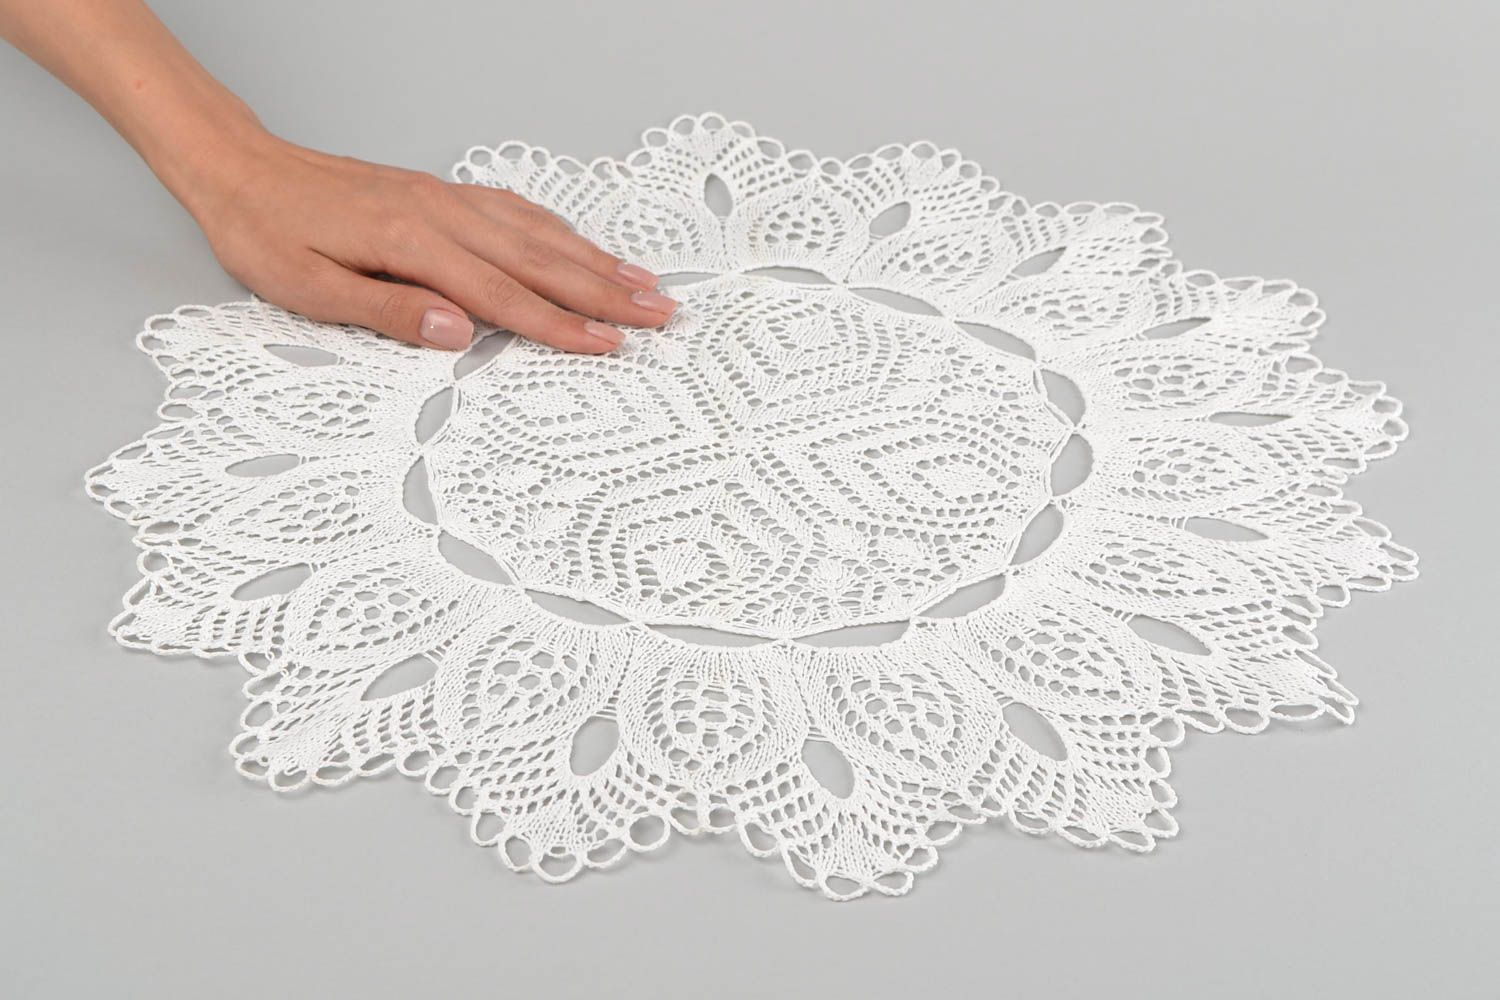 Handmade crocheted napkin knitted napkin for table home textiles decor ideas photo 2